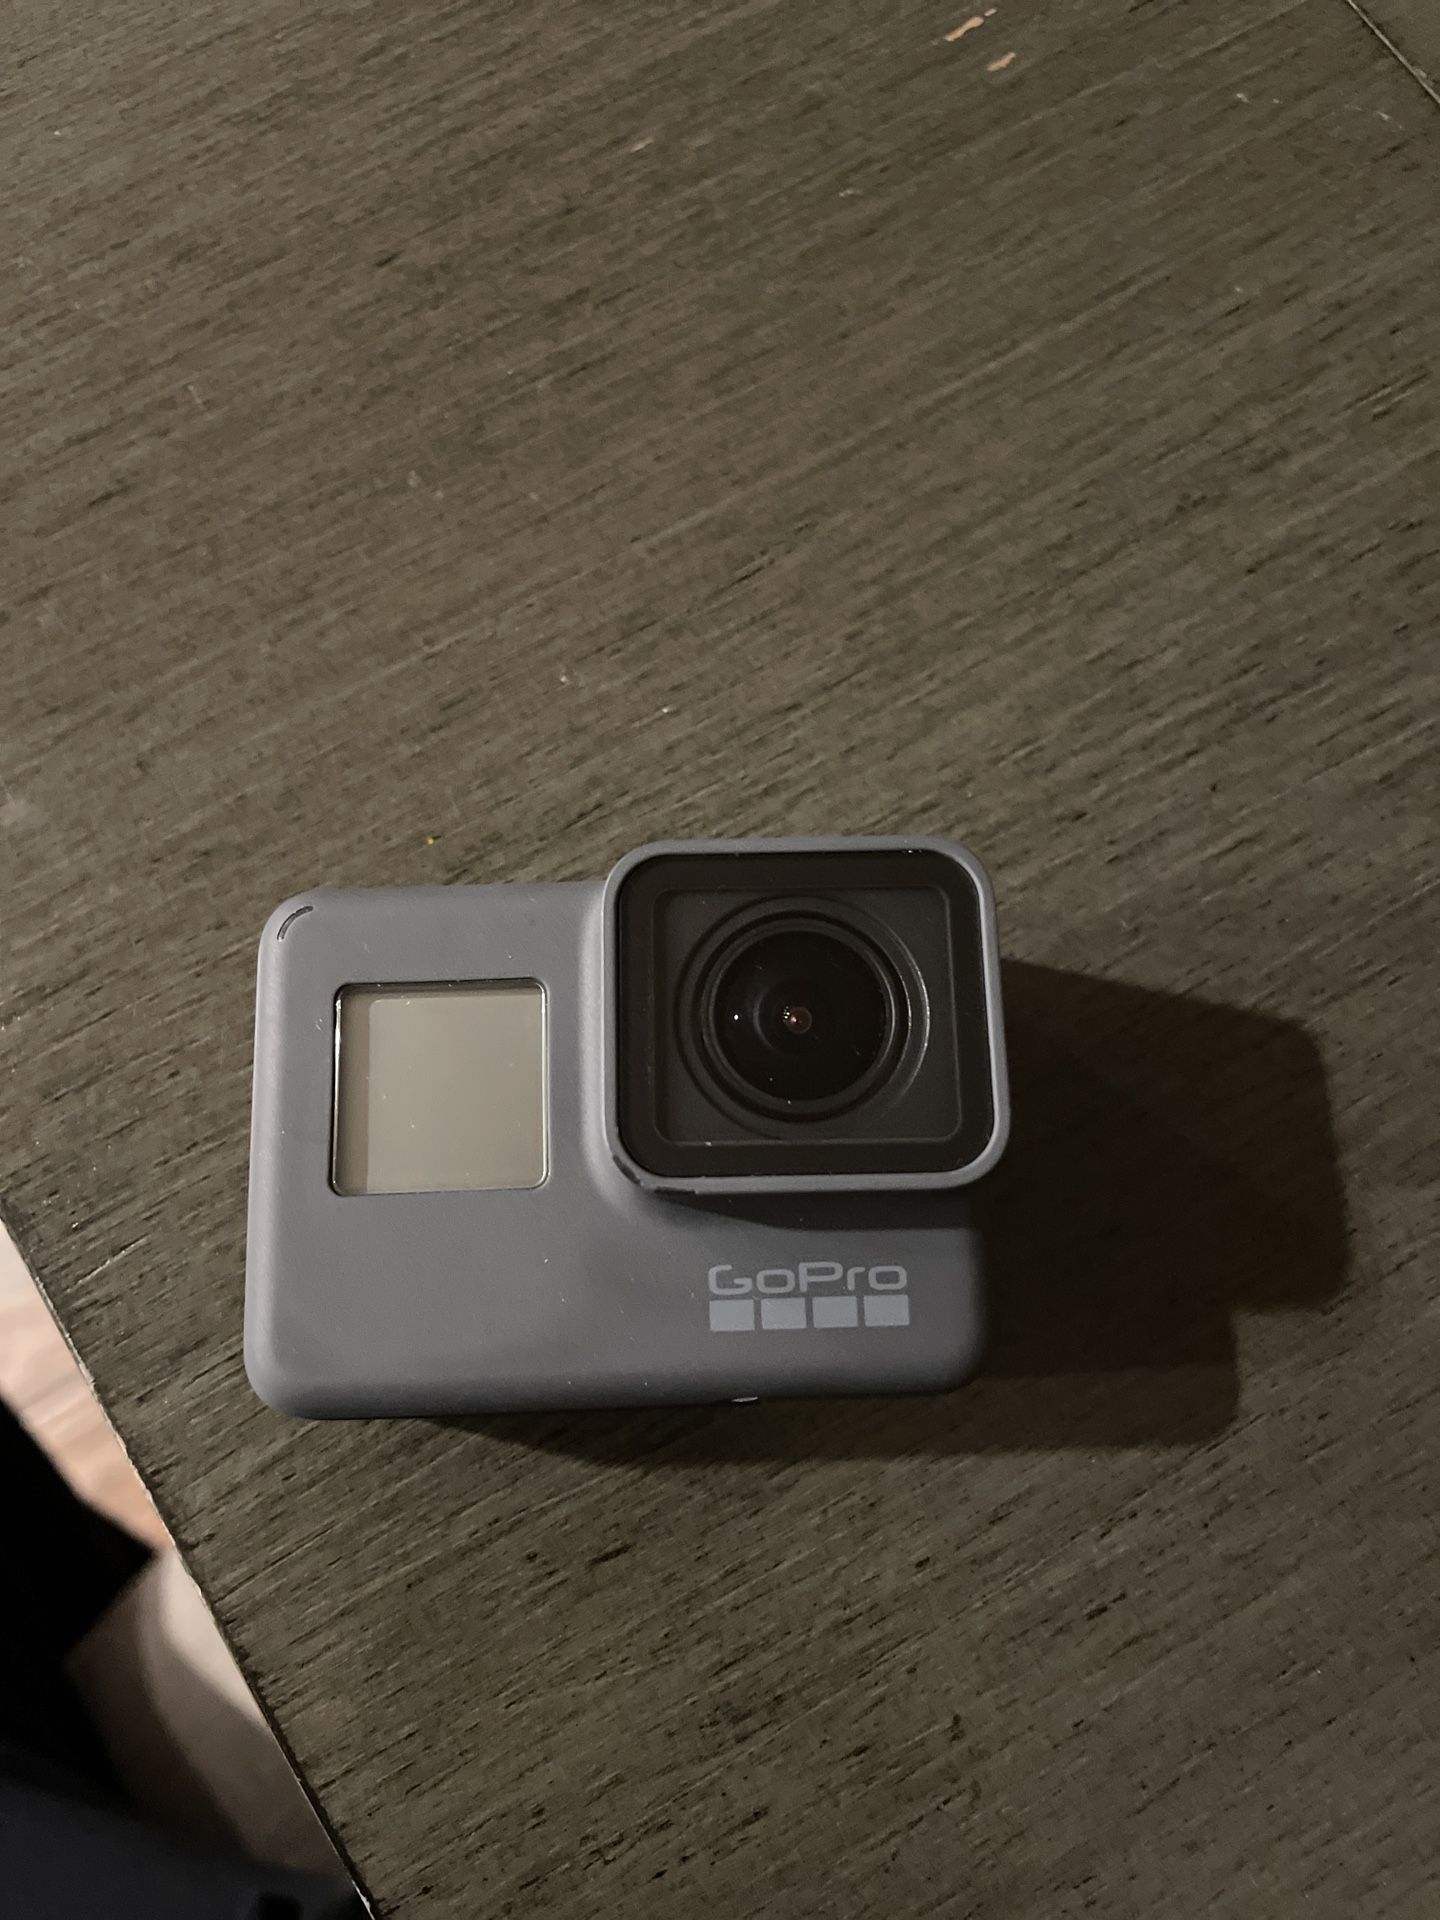 GoPro Hero 5 Black 4K Camera With Accessories